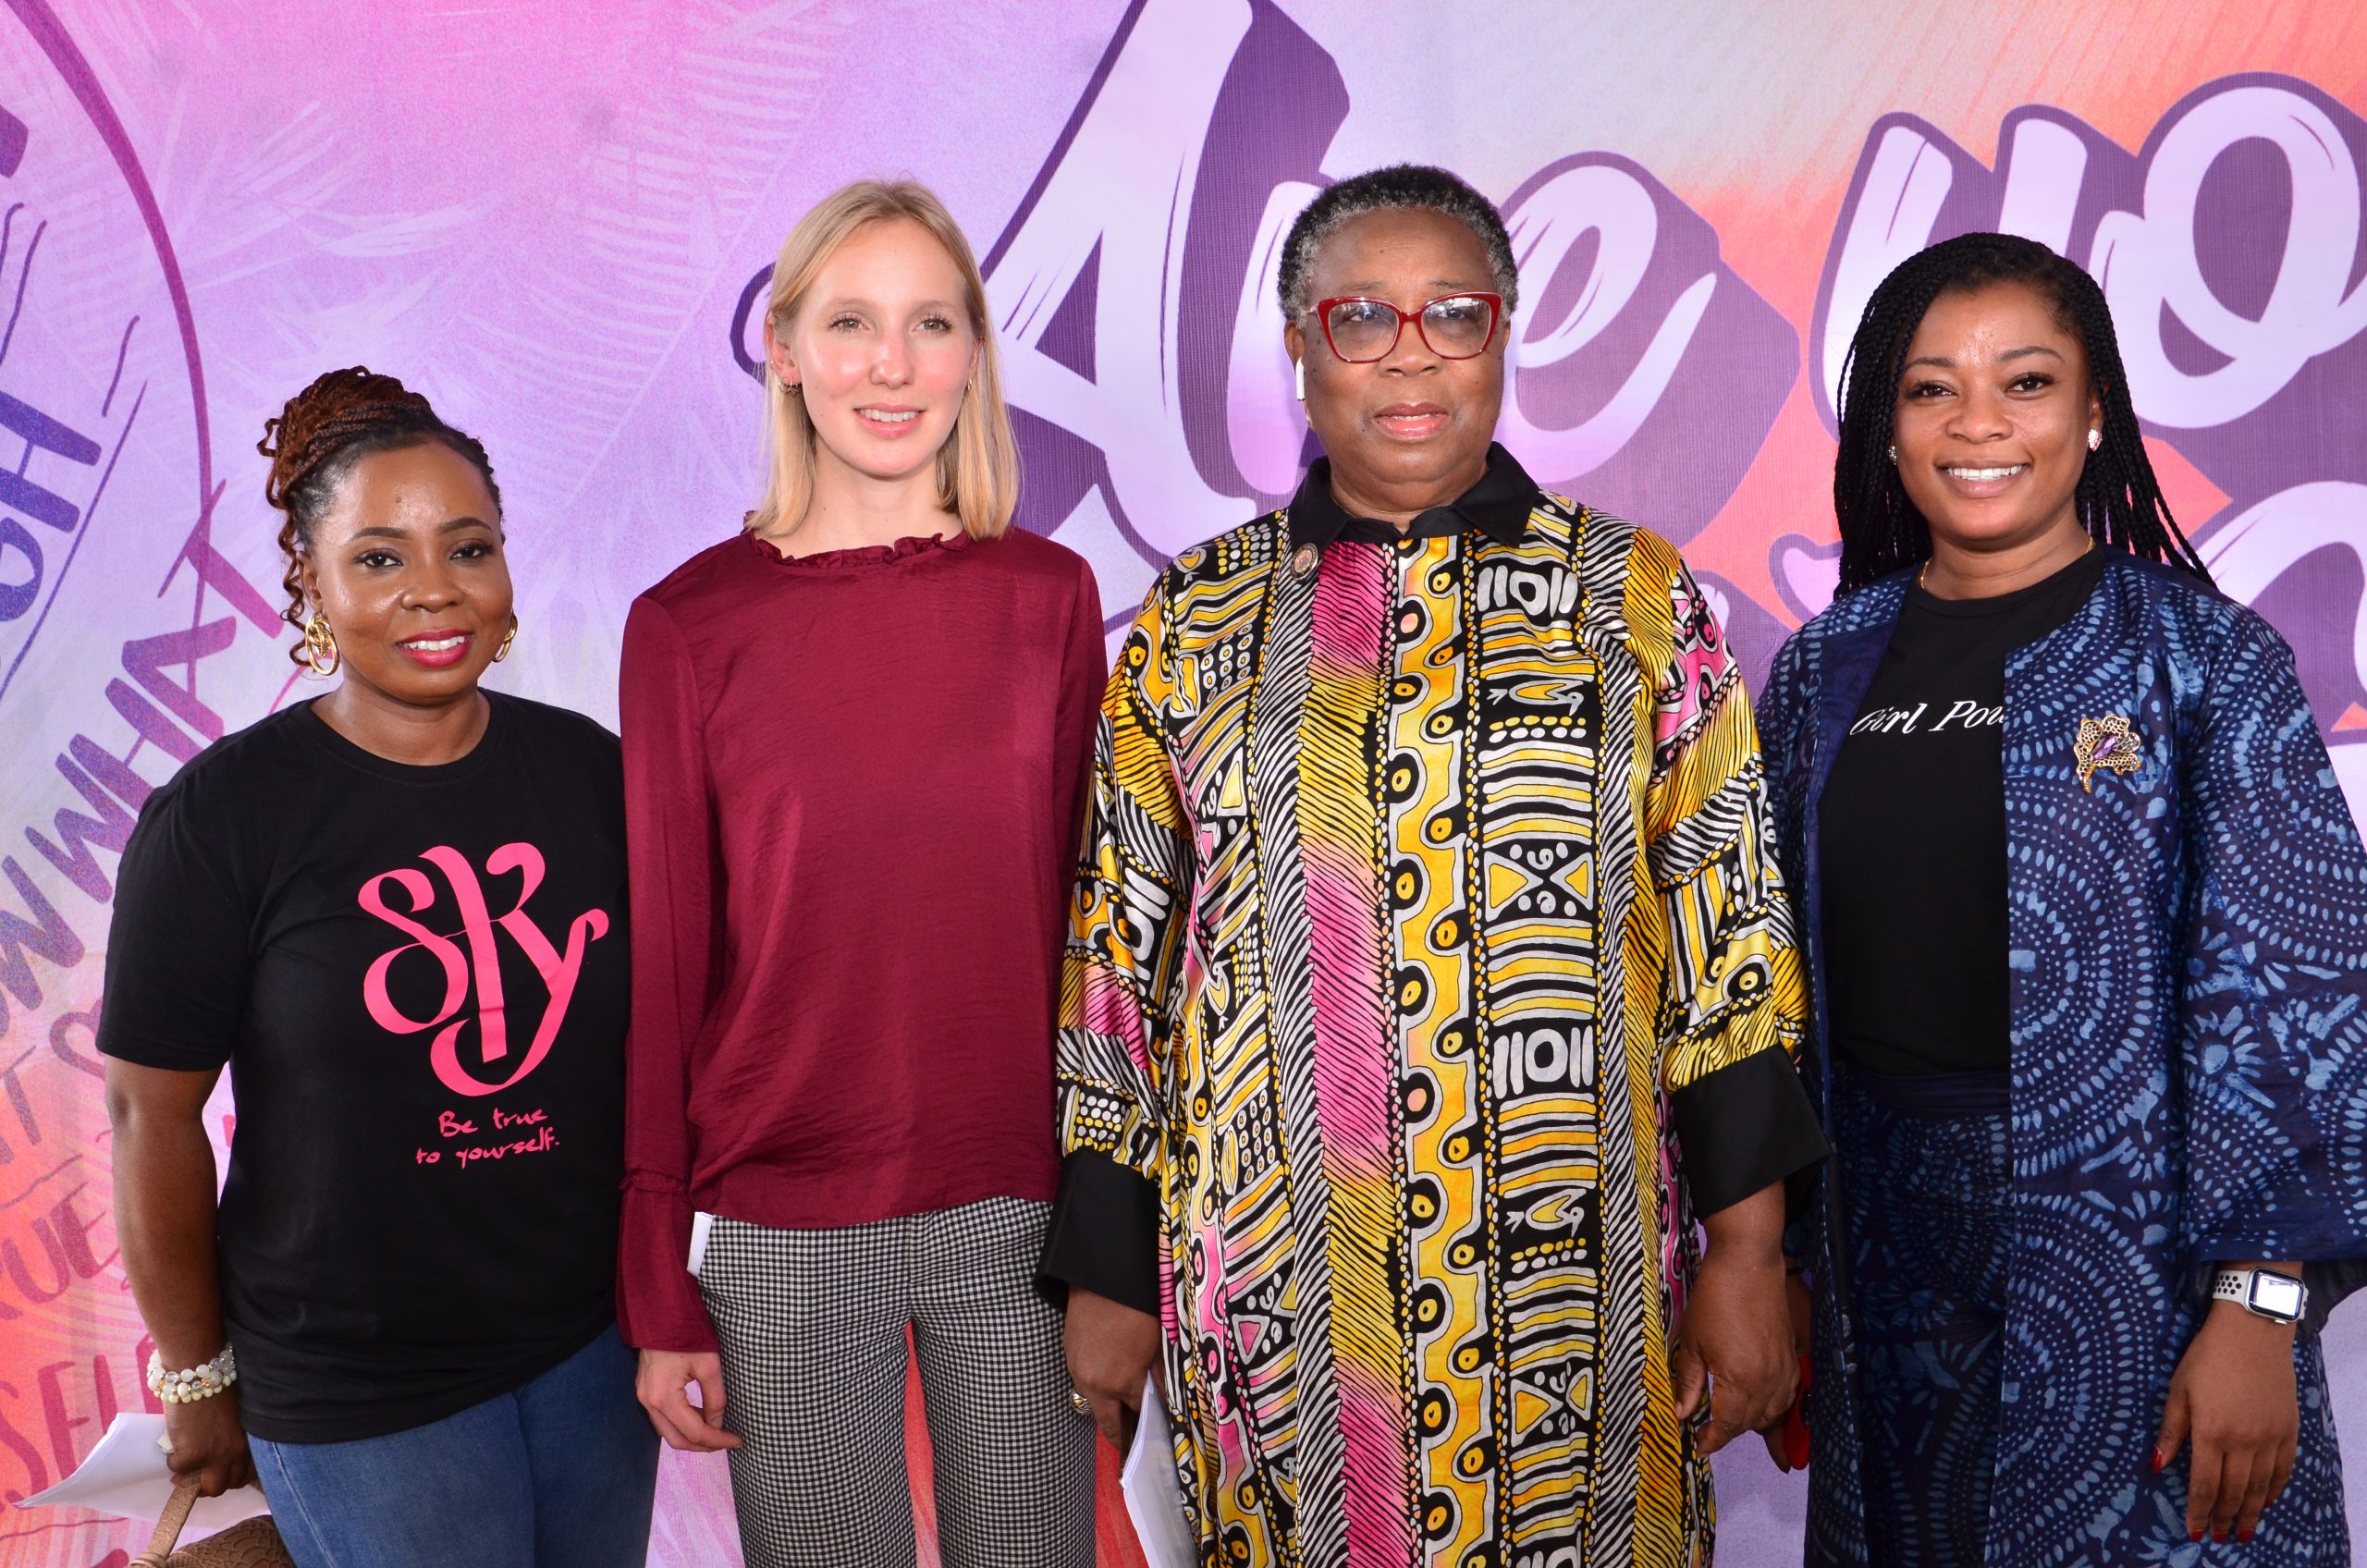 Lagos endorses SKY Girls movement to empower teenage girls